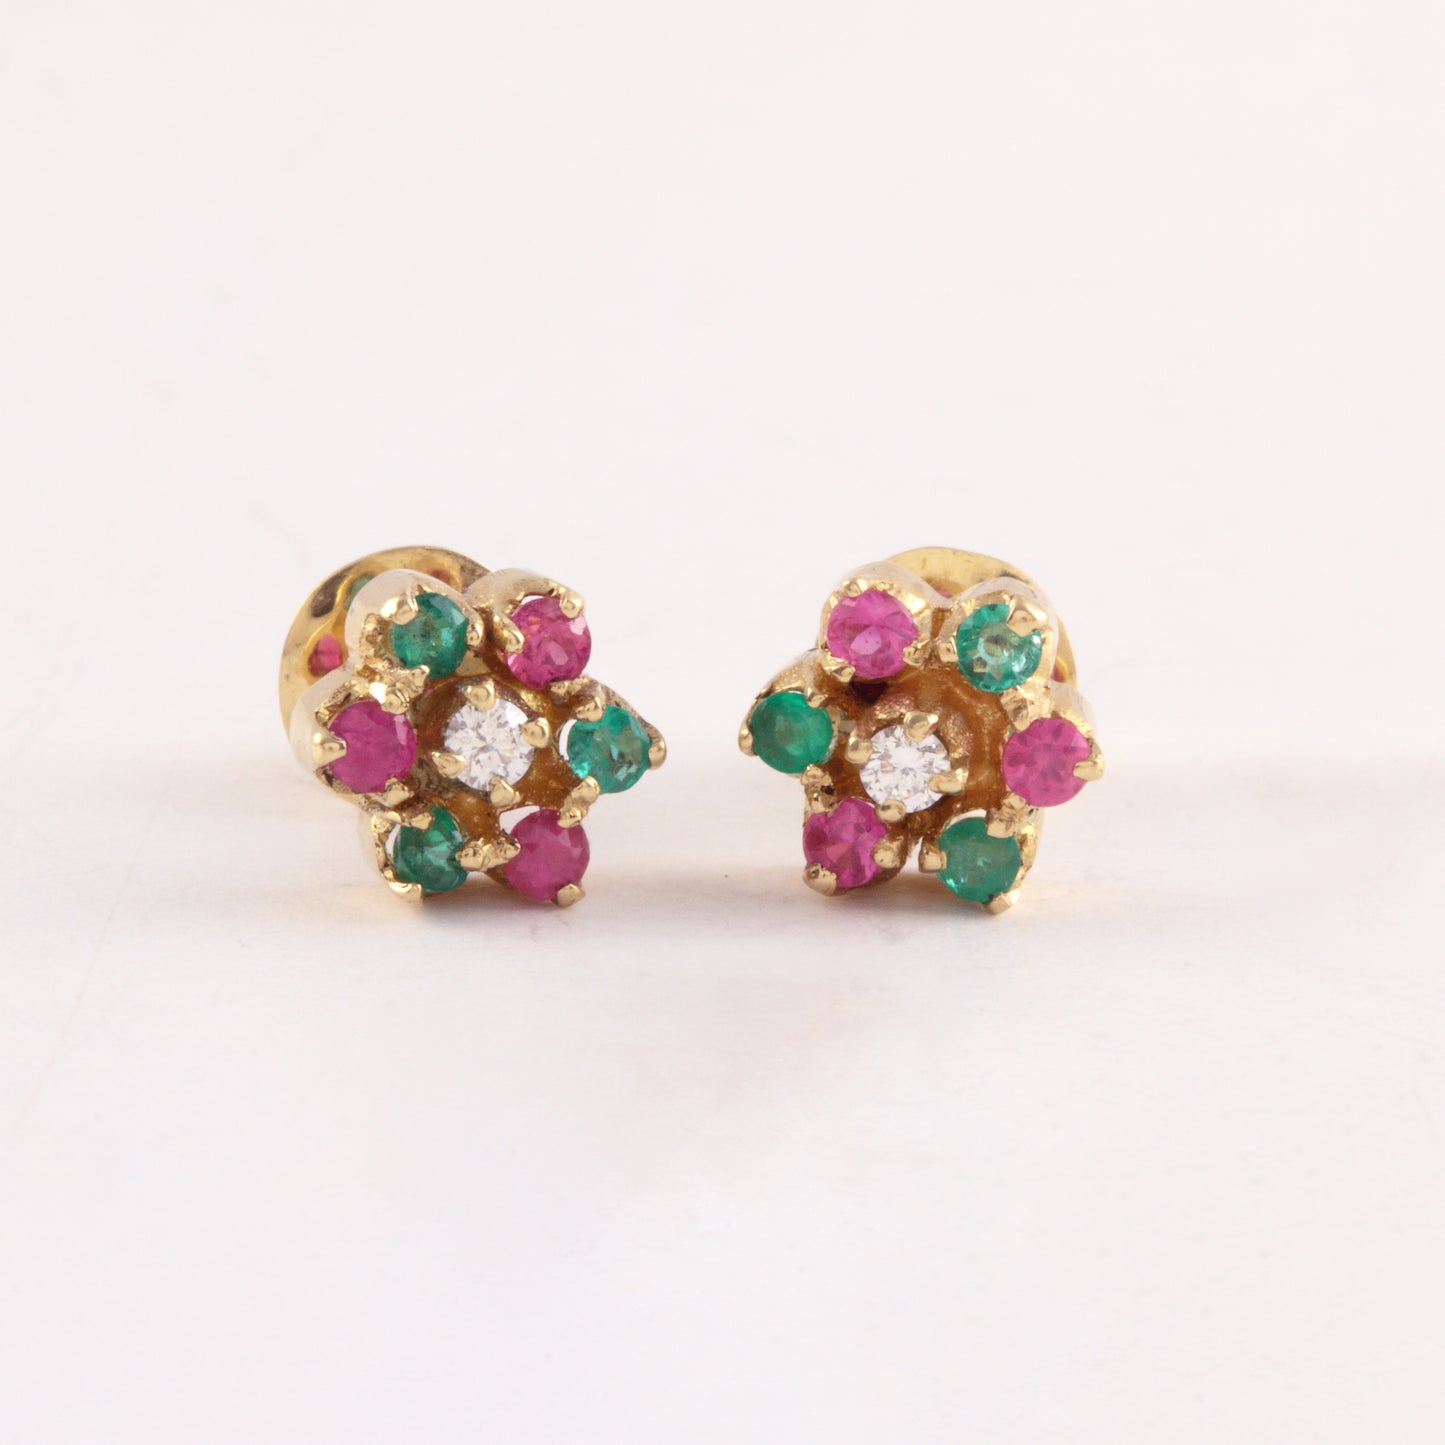 The Babyrasa Revati Floral Gold, Diamond, Ruby and Emerald Ear Studs by Rasvihar